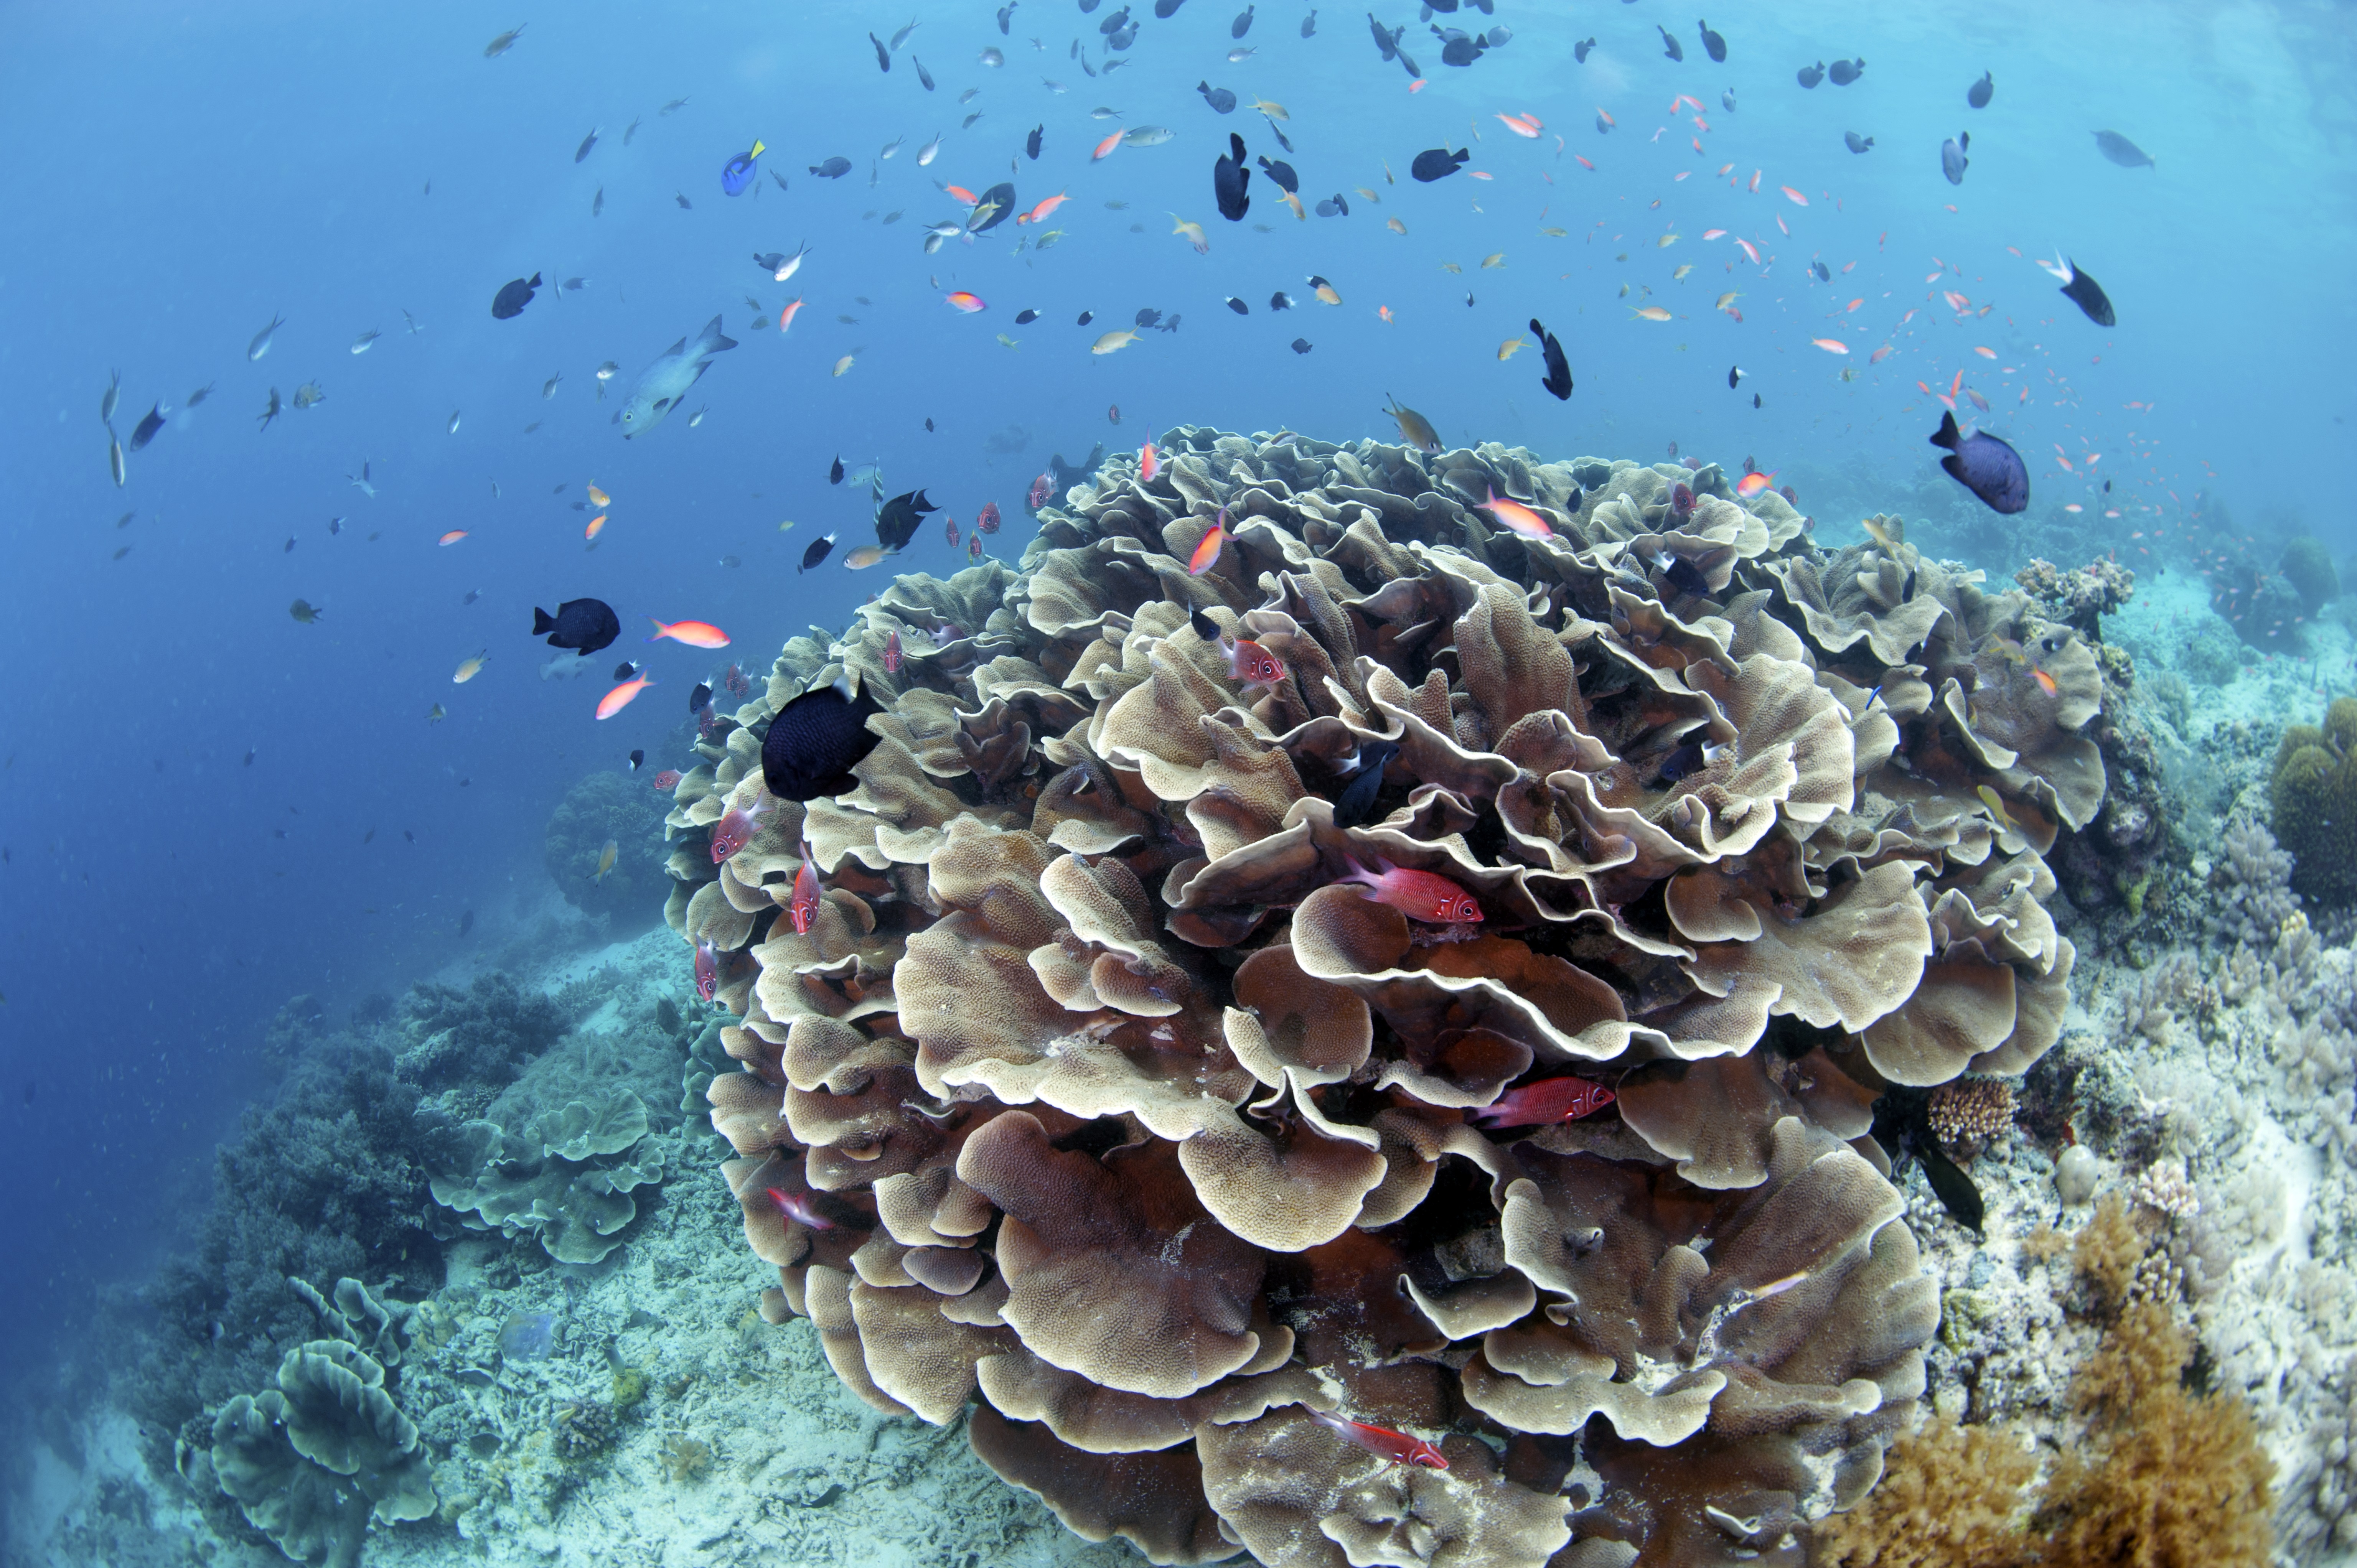 78691 descargar imagen naturaleza, agua, peces, coral, arrecifes: fondos de pantalla y protectores de pantalla gratis